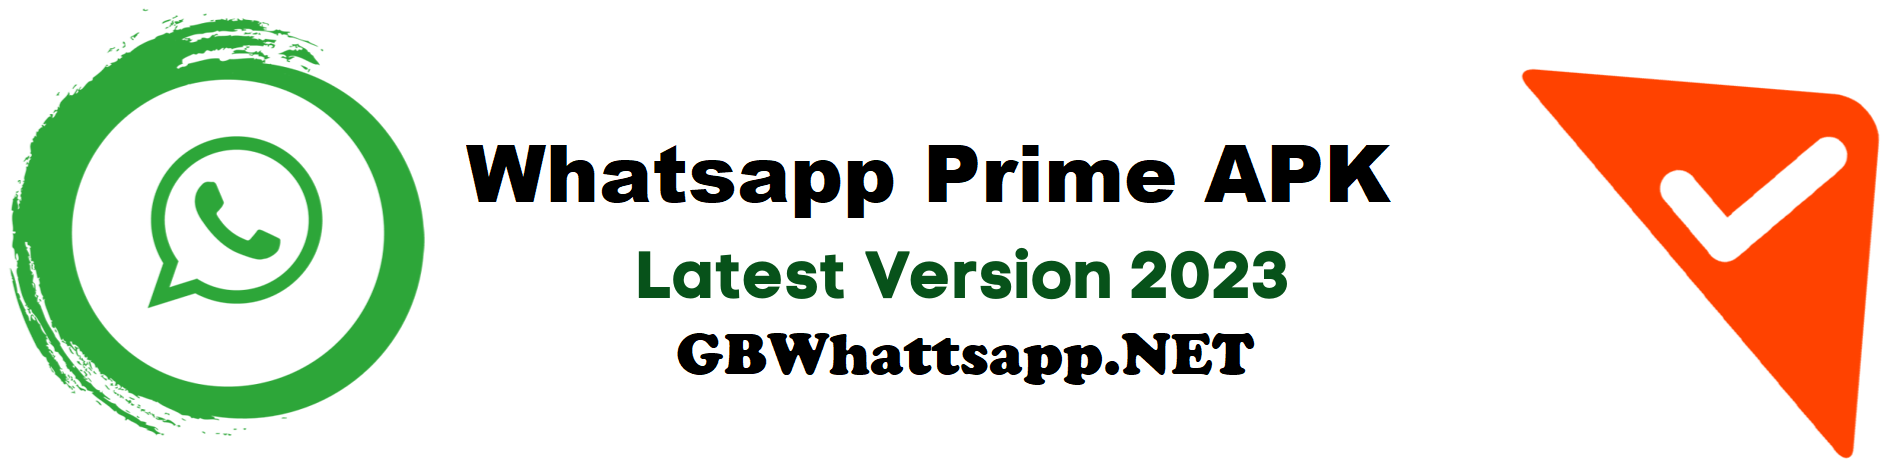 Whatsapp Prime apk